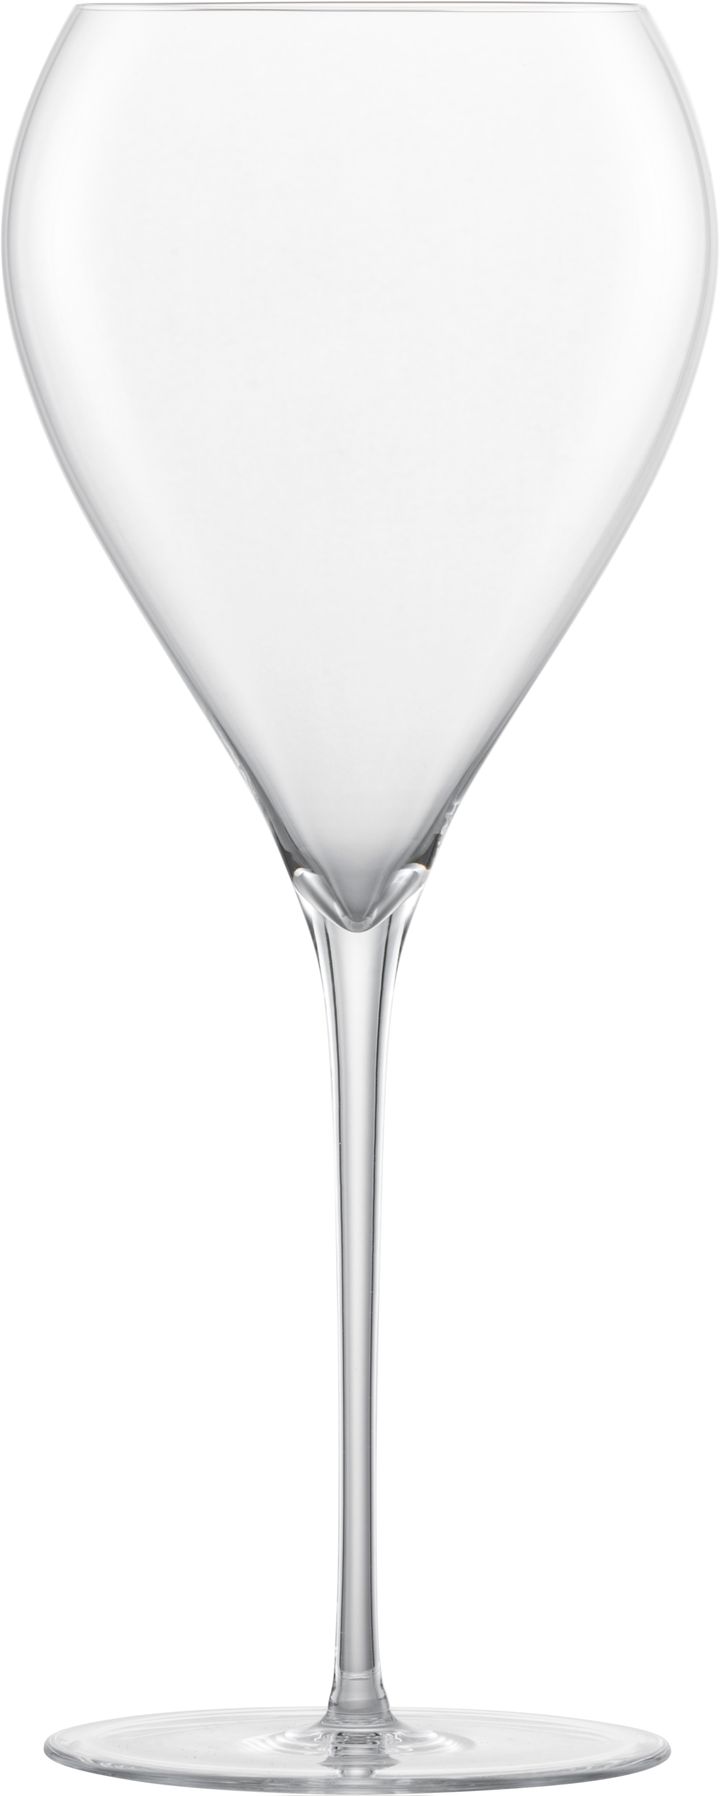 Enoteca champagneglas - 67 cl - Zwiesel